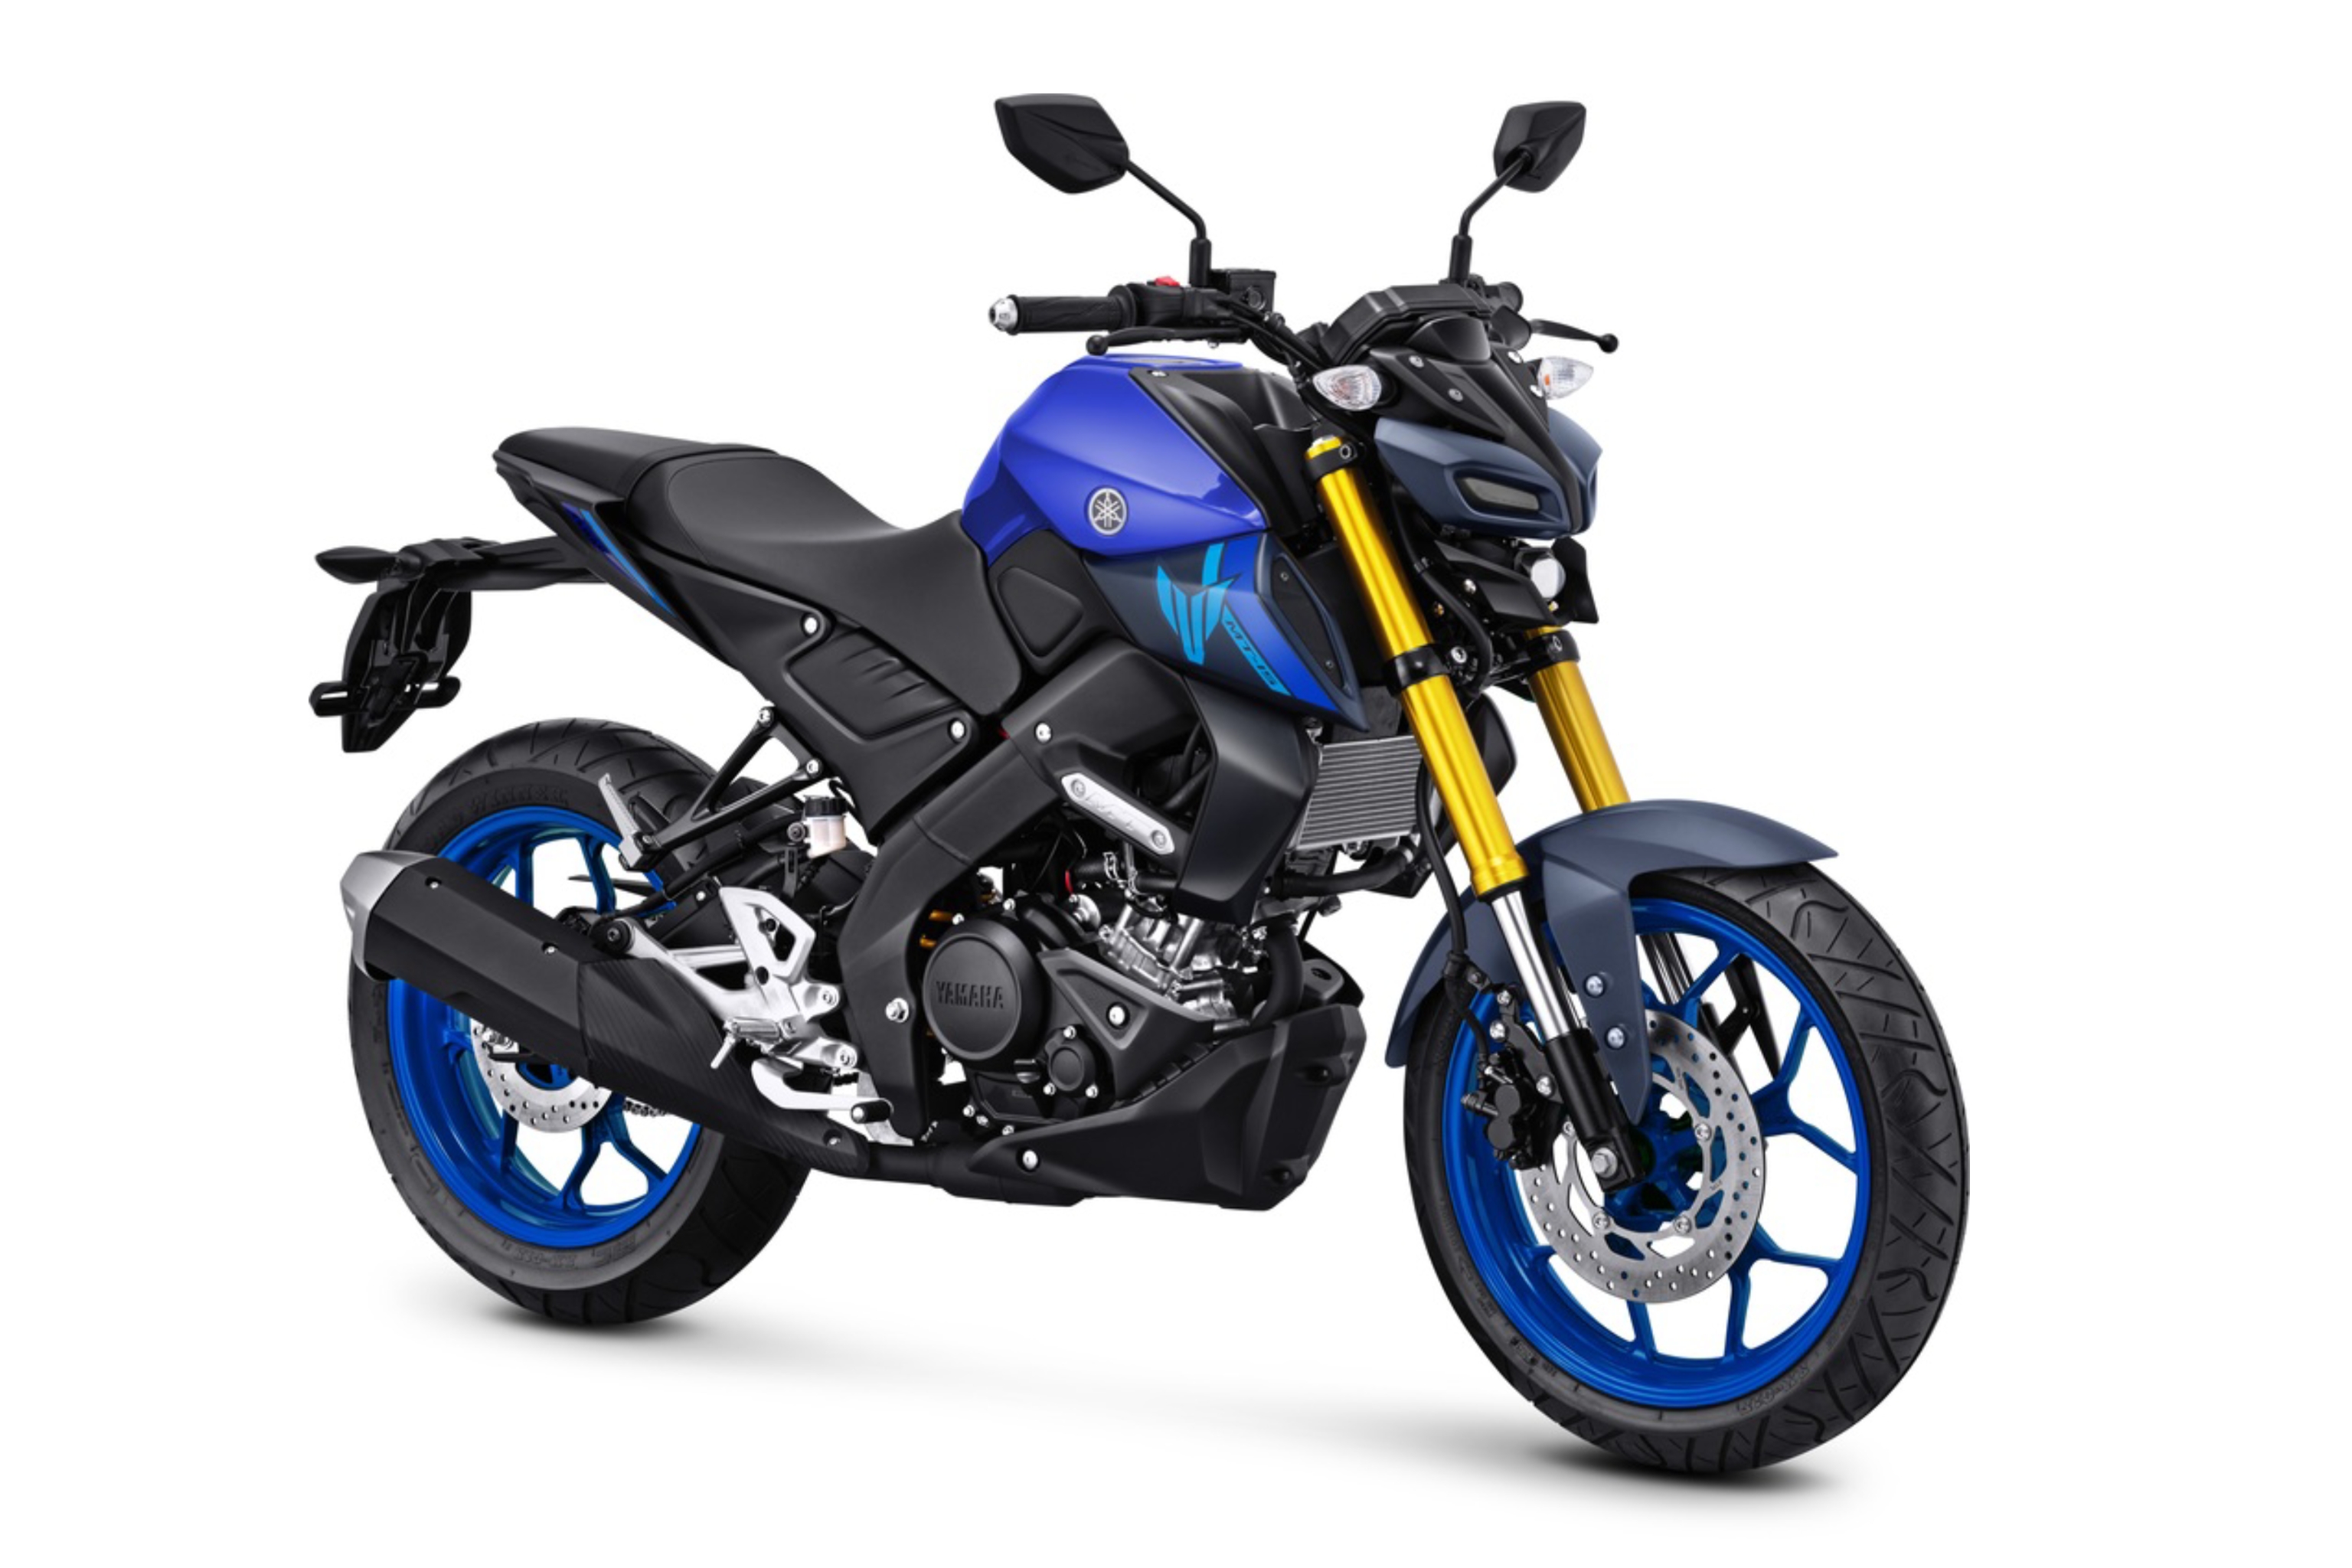 Yamaha Kasih 2 Warna Baru MT-15, Sport Naked Bike Ini Semakin 'Moge Look'